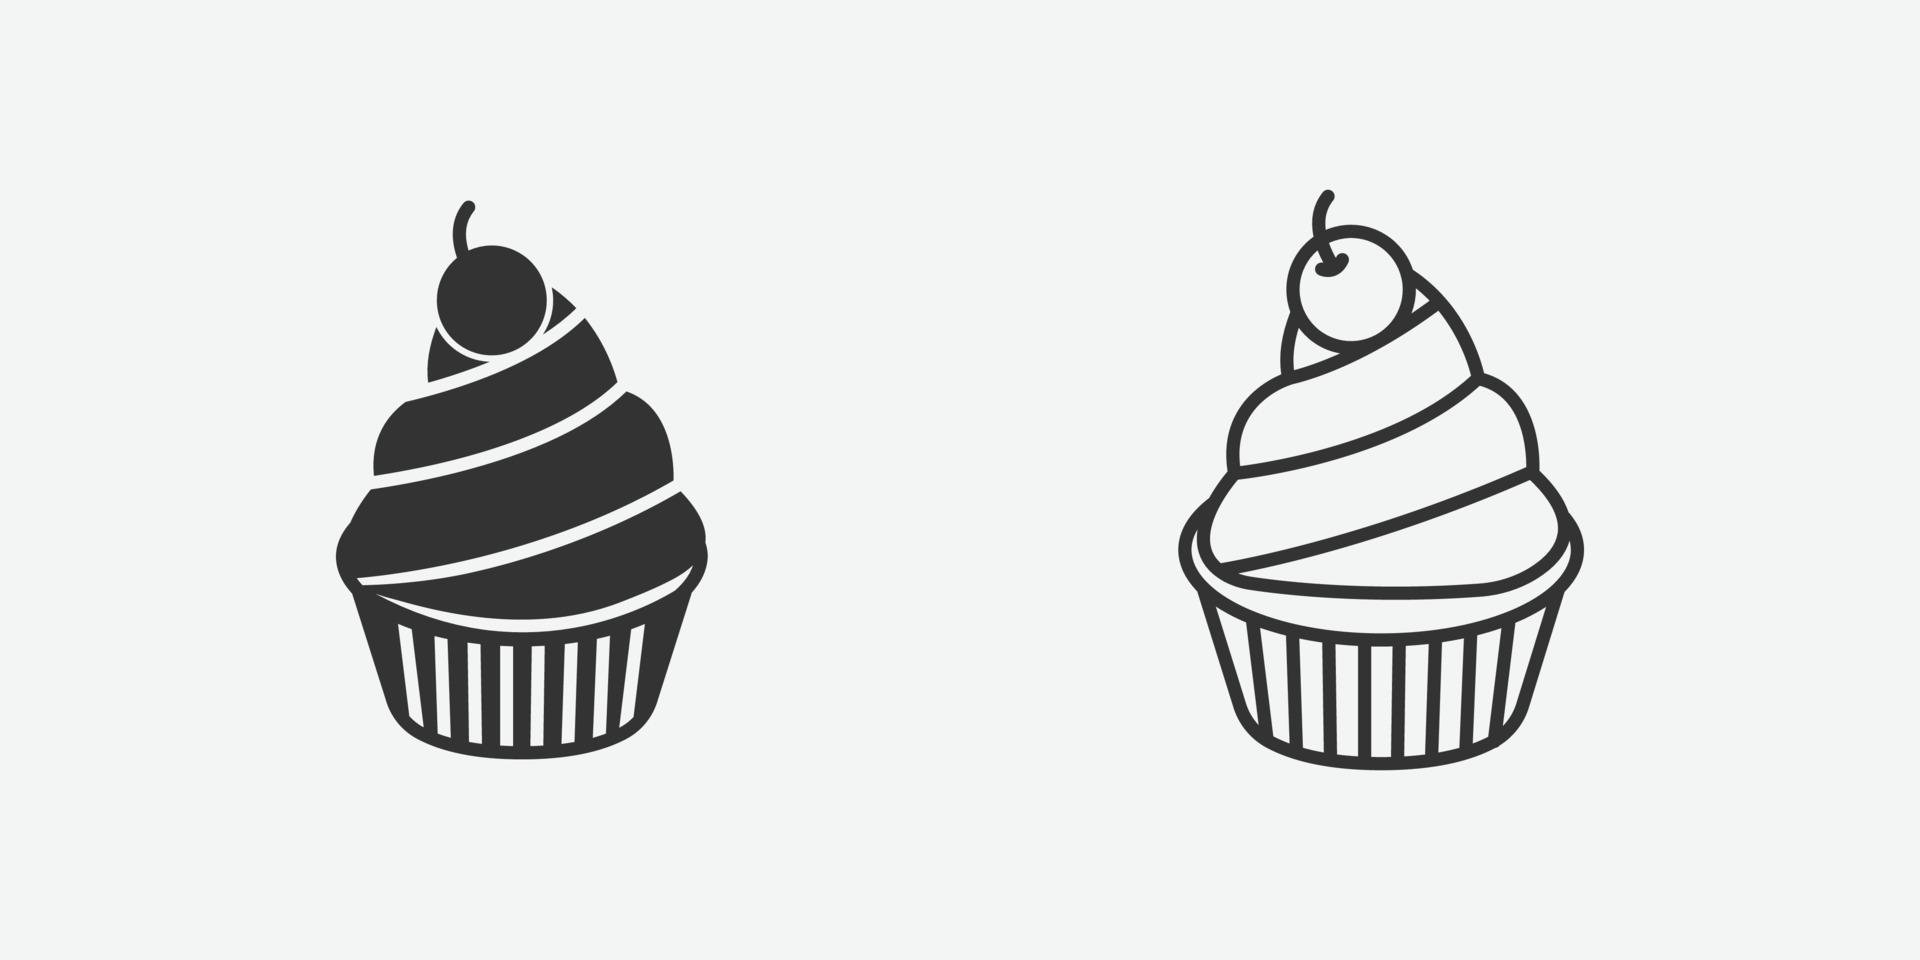 Cupcake-Symbol-Vektorillustration auf grauem Hintergrund vektor